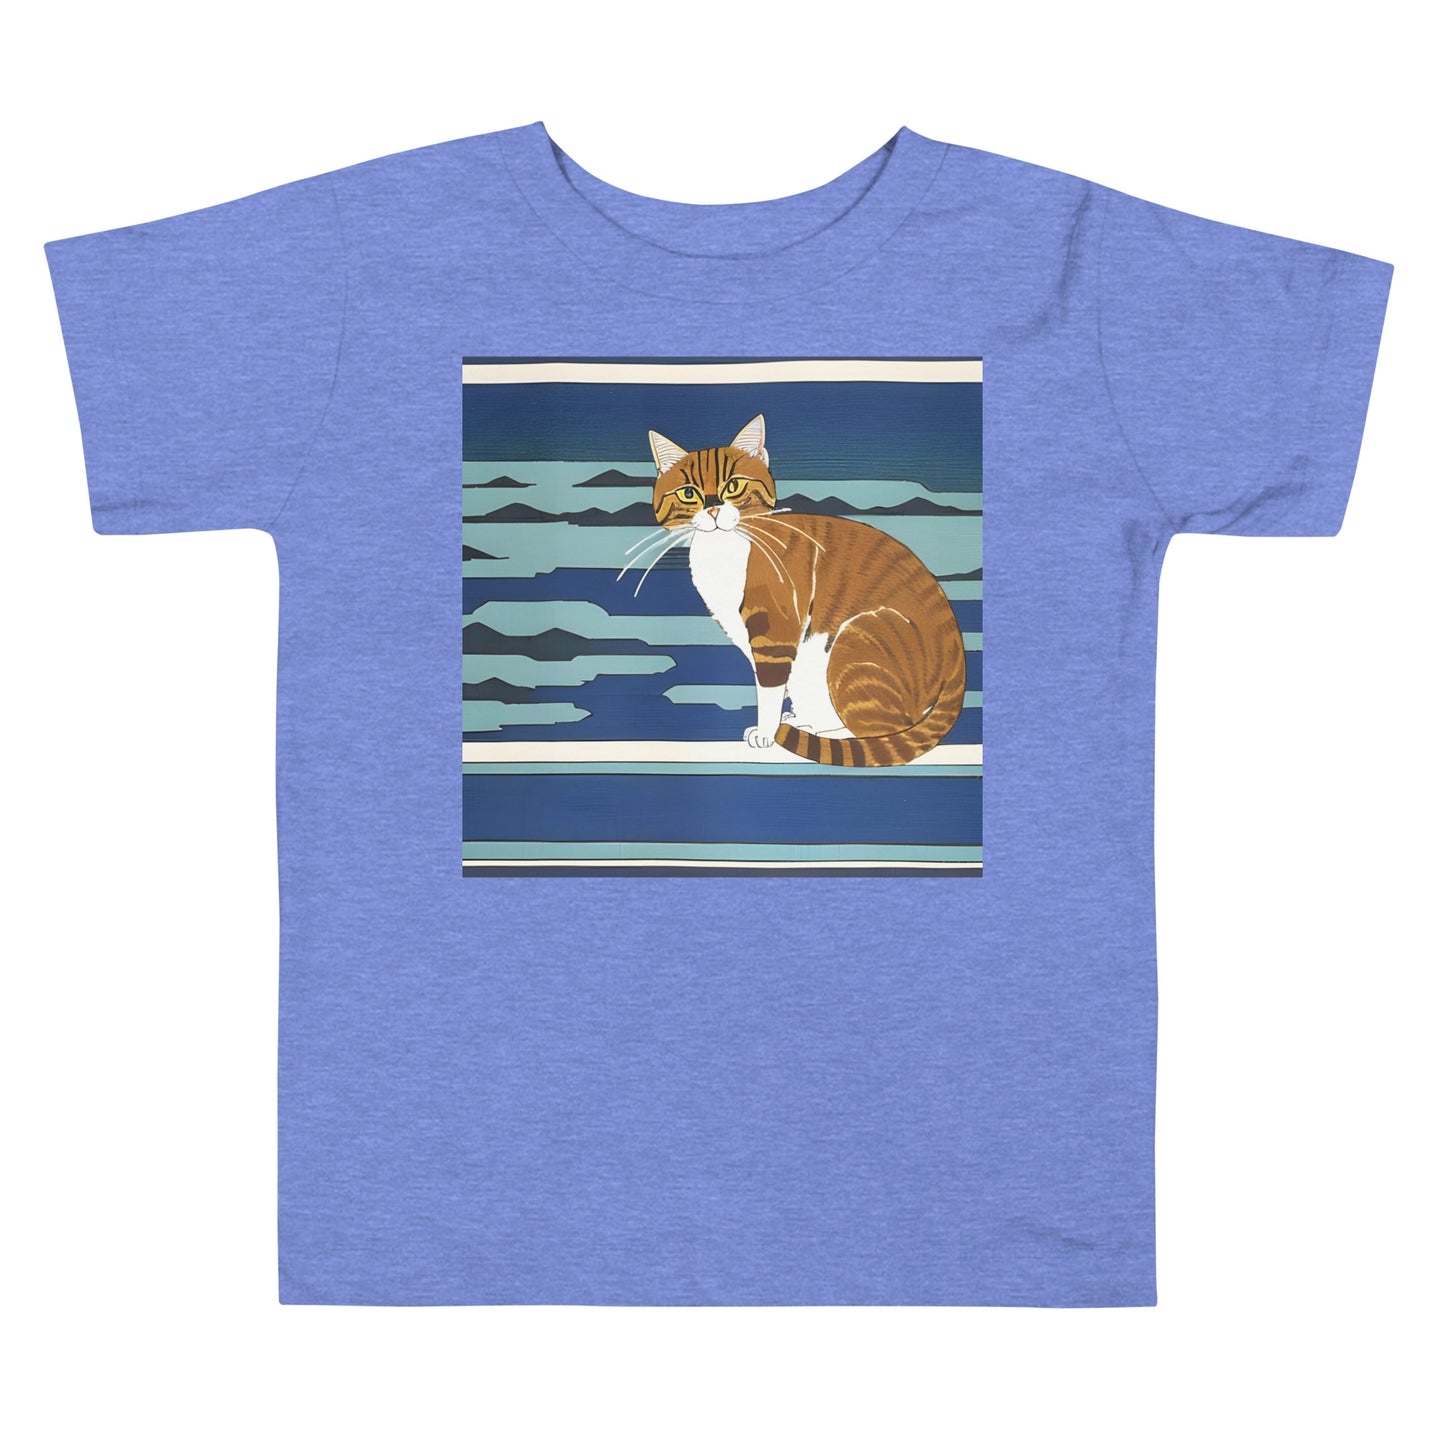 Meowsome Toddler's T-Shirt - 028